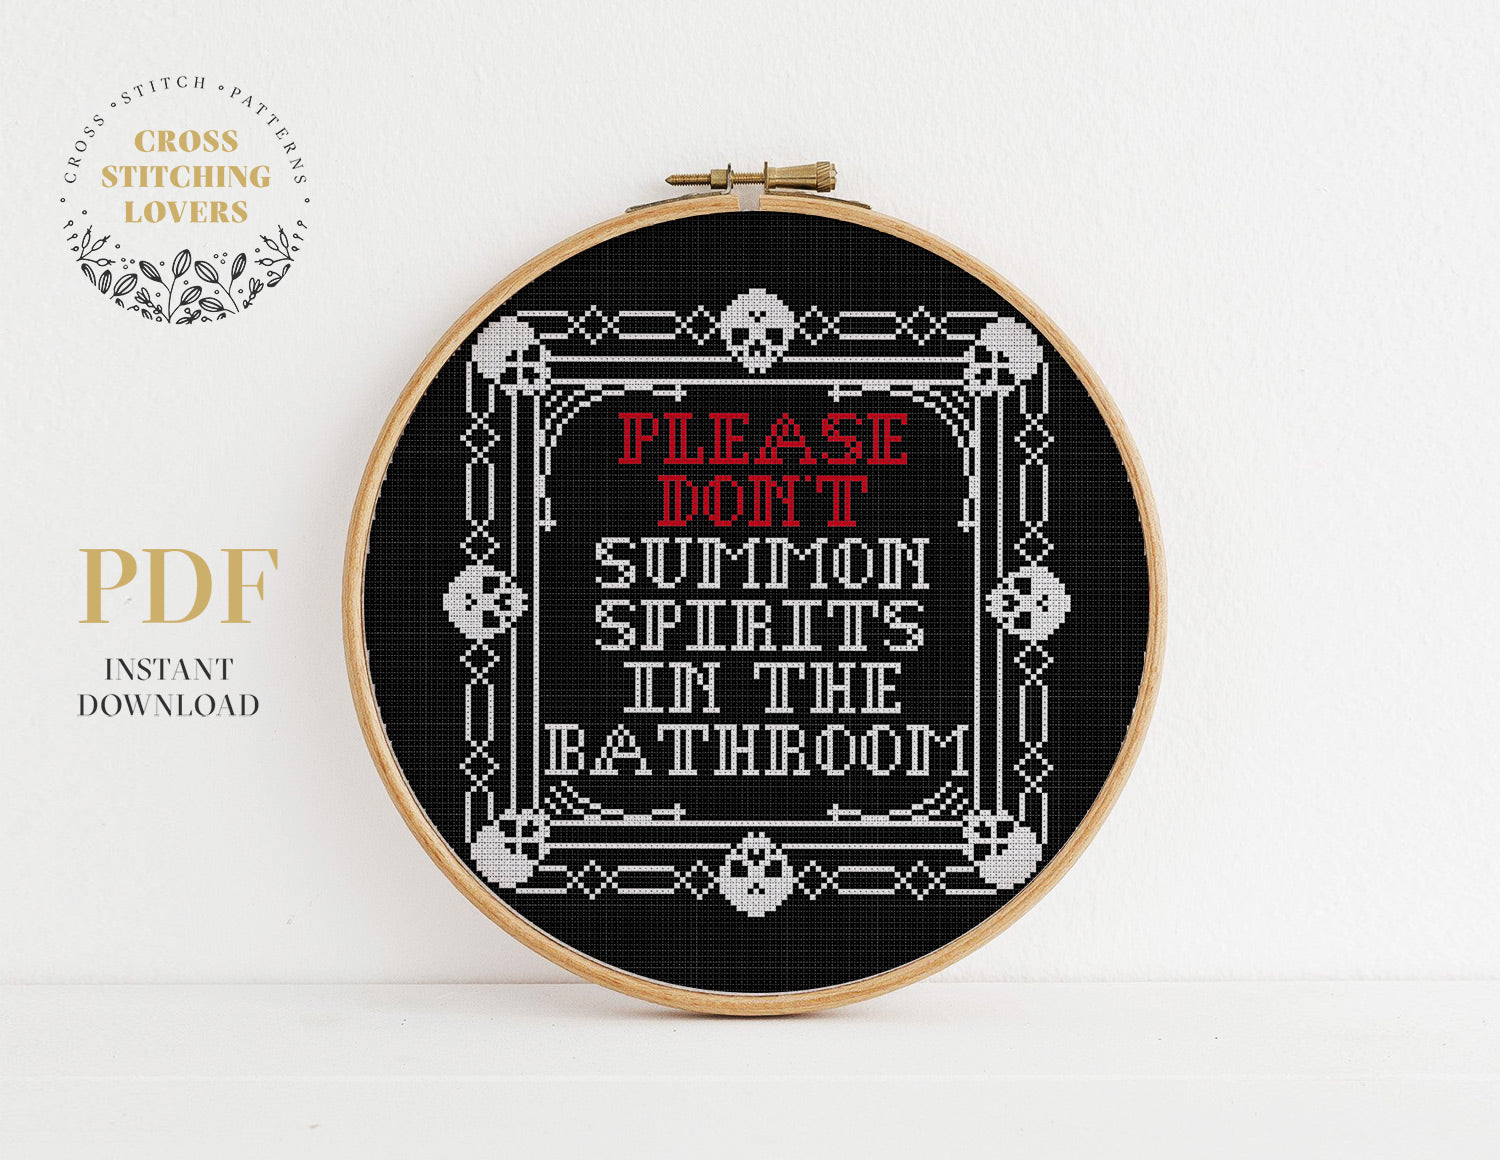 Please Don't Summon Spirits in the Bathroom - Cross stitch pattern